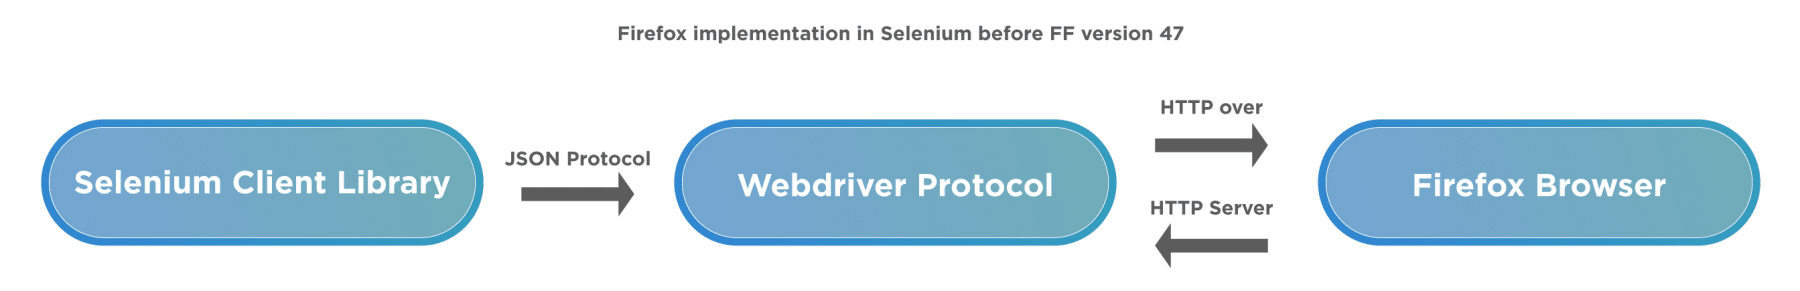 FirefoxDriver Selenium Implementation before GeckoDriver